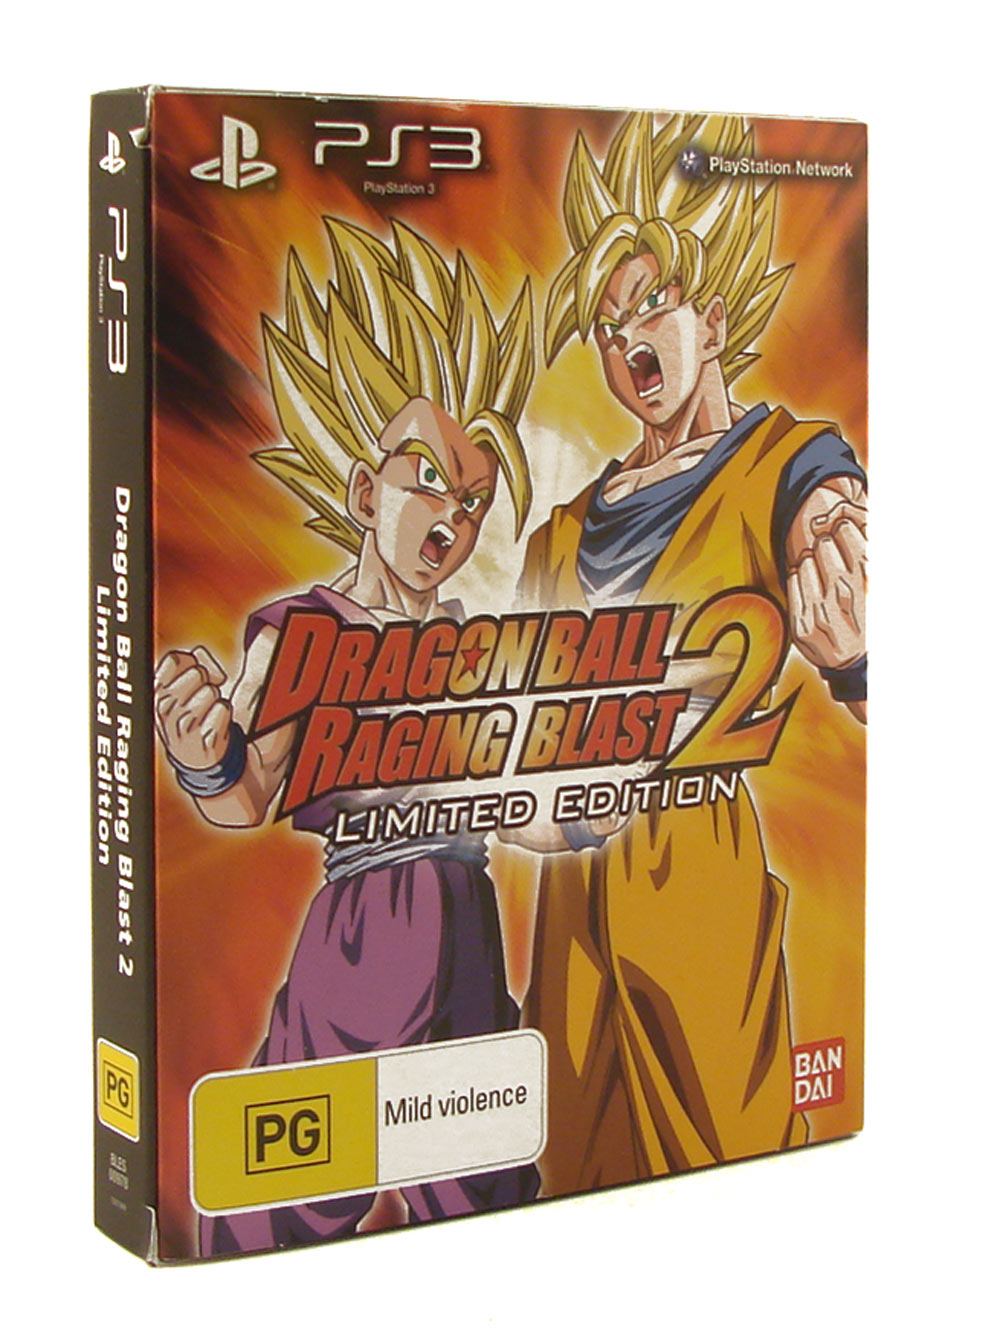 Dragon Ball Raging Blast 2 Limited Edition English Language Version